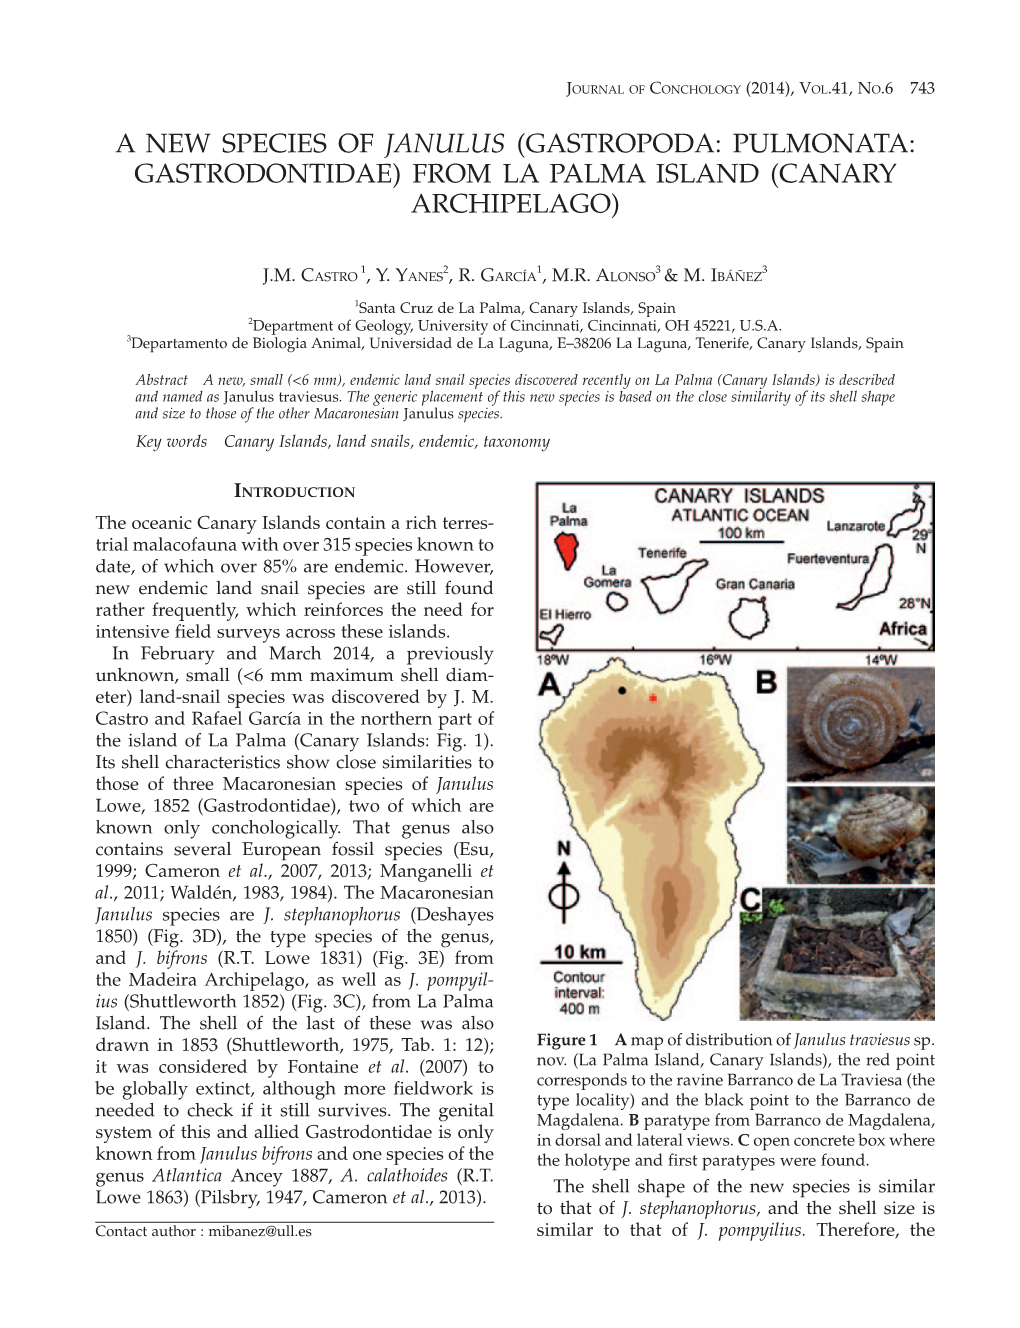 Gastropoda: Pulmonata: Gastrodontidae) from La Palma Island (Canary Archipelago